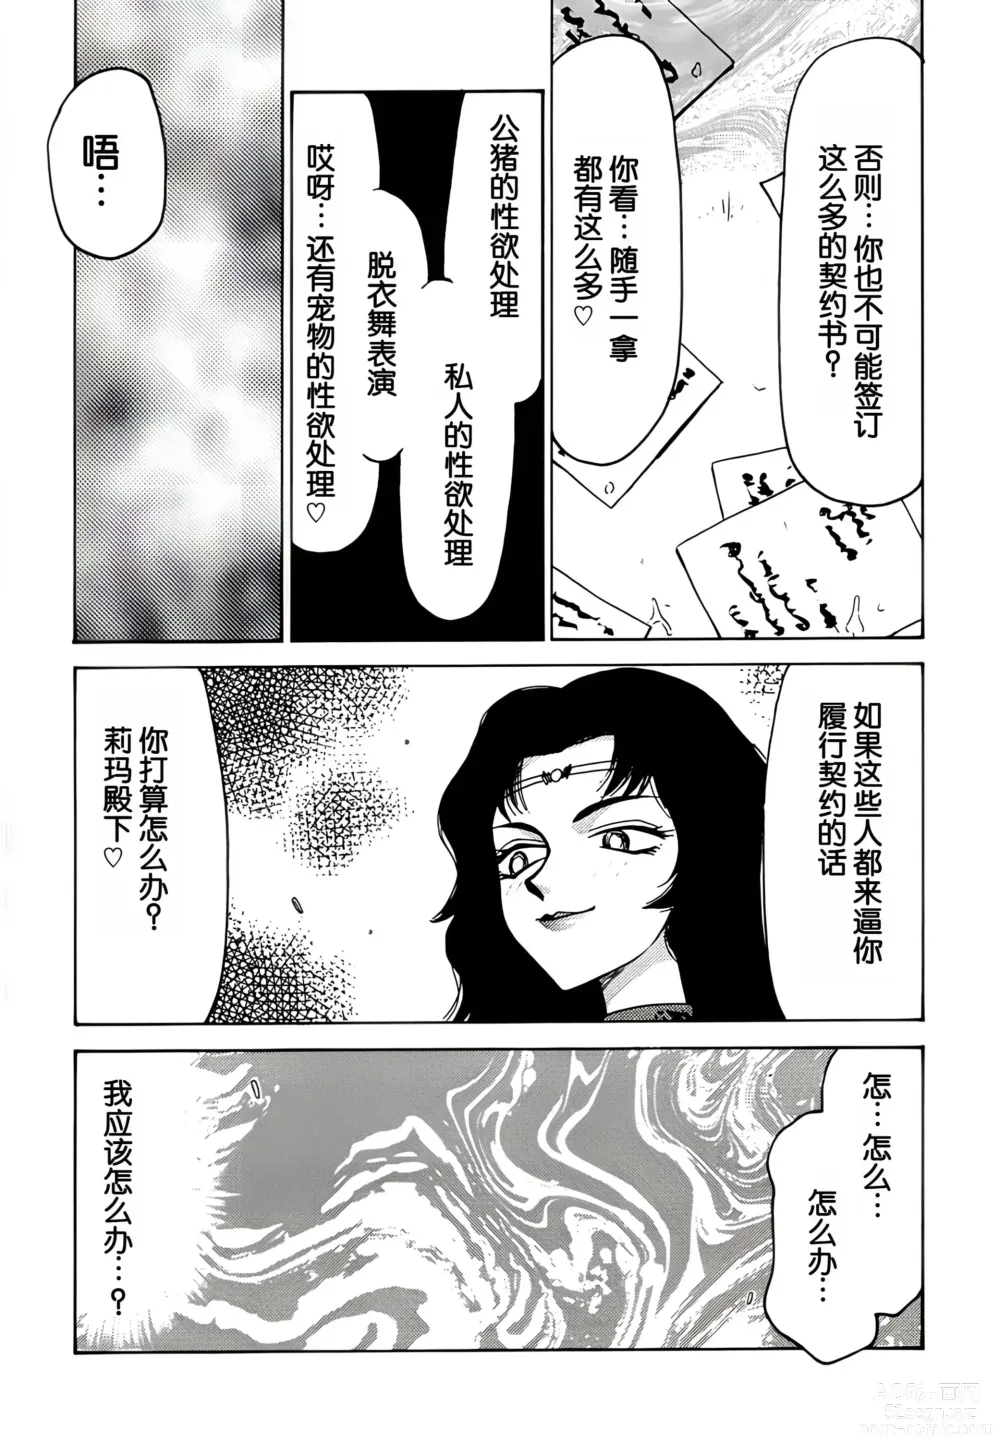 Page 70 of doujinshi Nise DRAGON BLOOD! 6